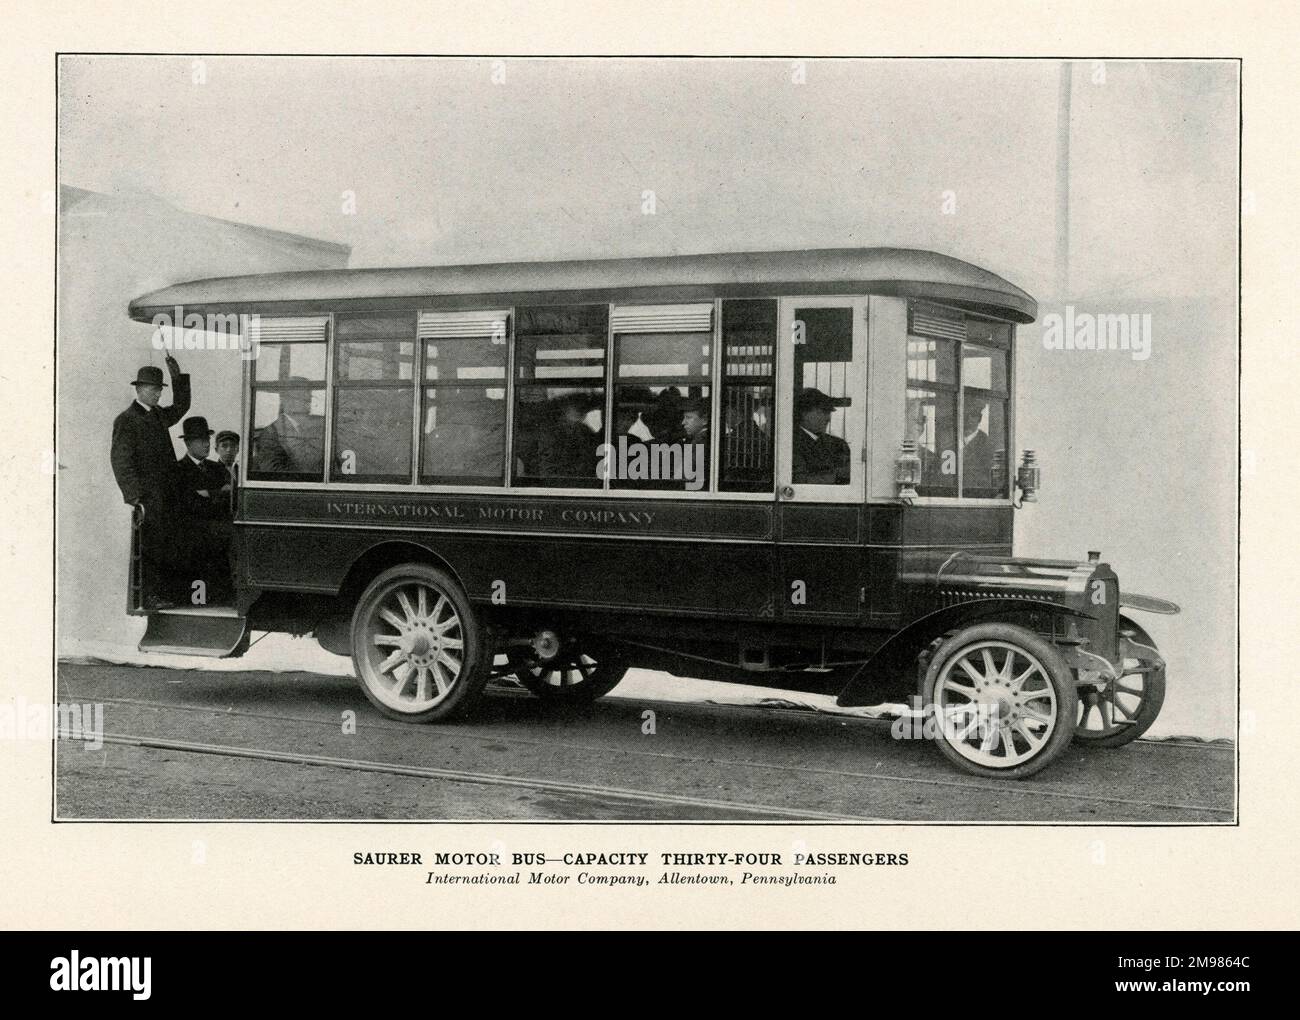 Saurer Motor Bus, capacity 34 passengers, International Motor Company, Allentown, Pennsylvania, USA. Stock Photo